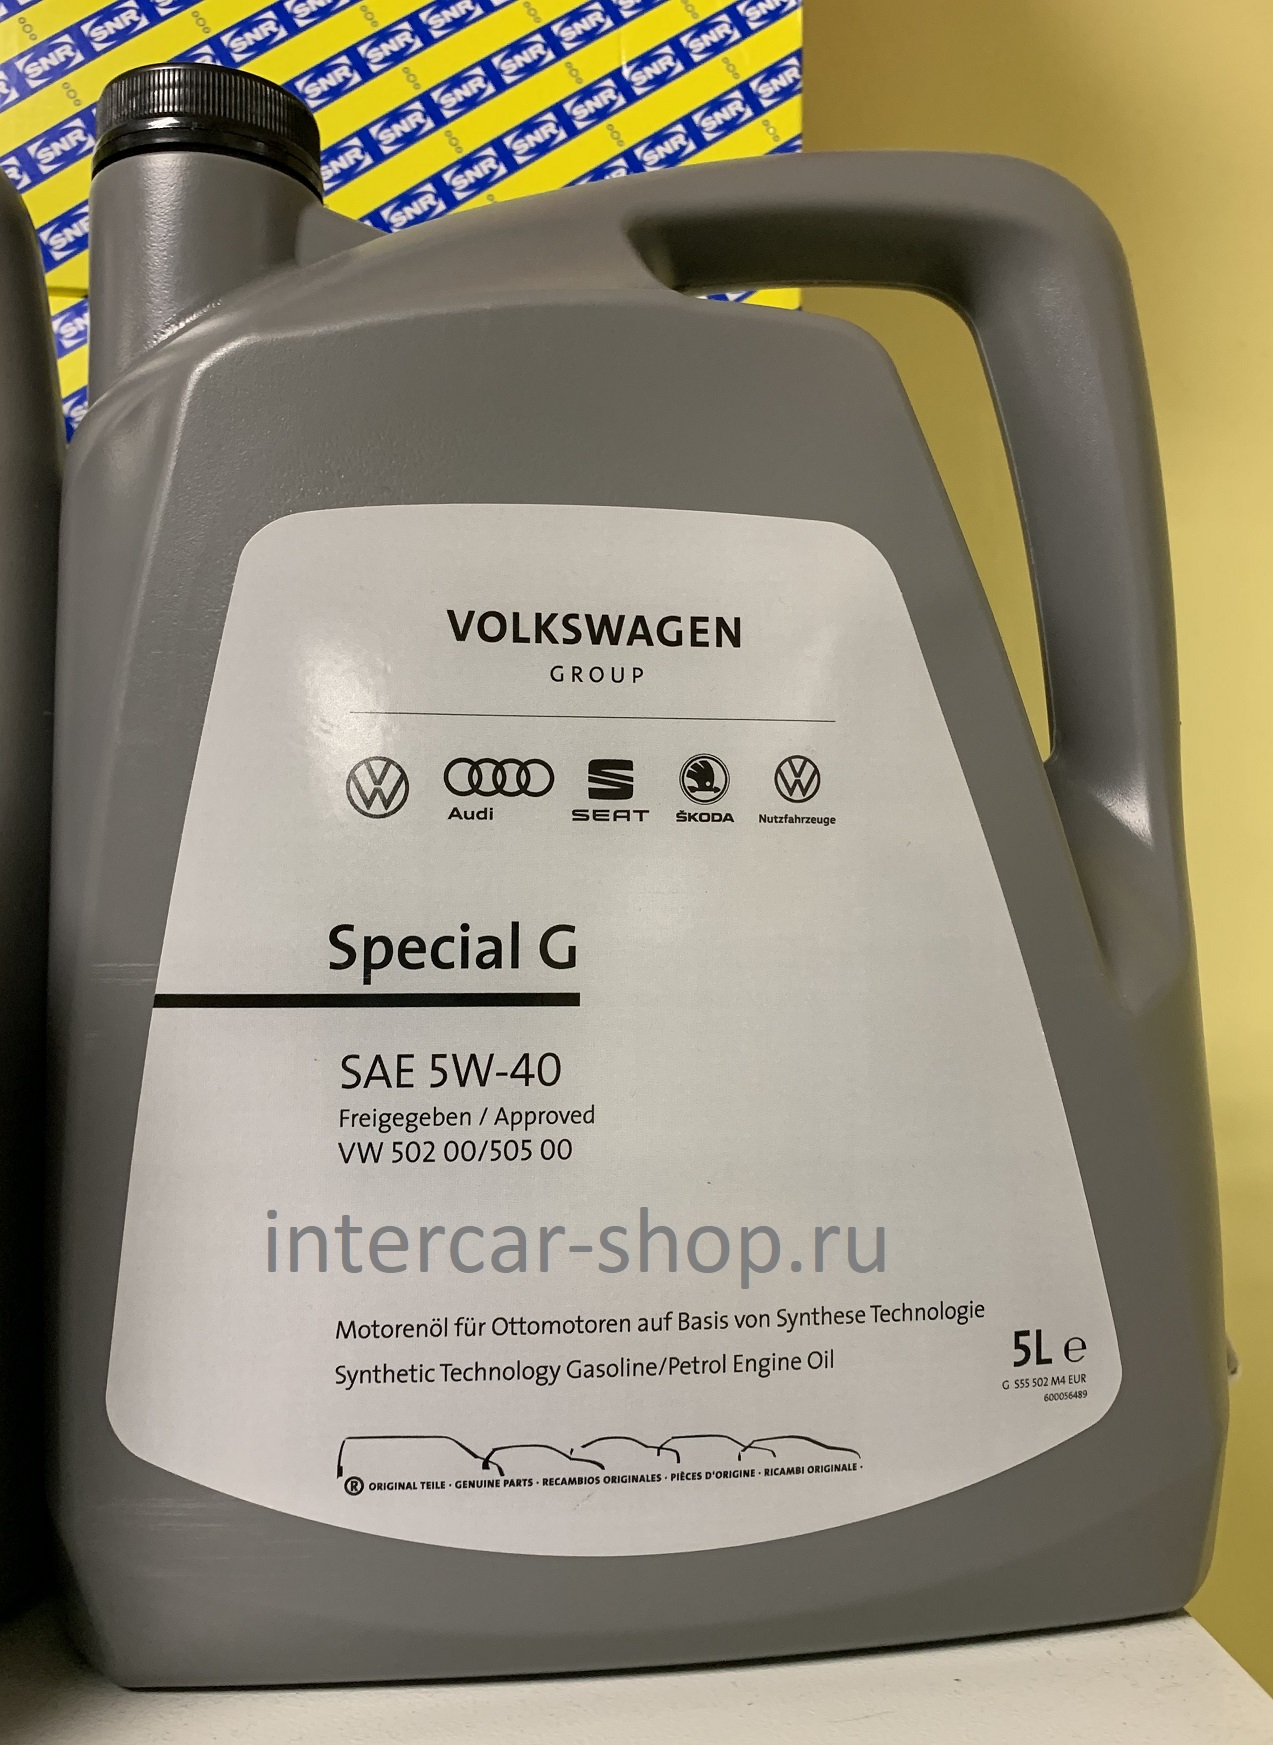 VAG G 052 502 m4. VAG Original Special g 5w40. 502 505 Volkswagen. VAG G r52 502 m4.